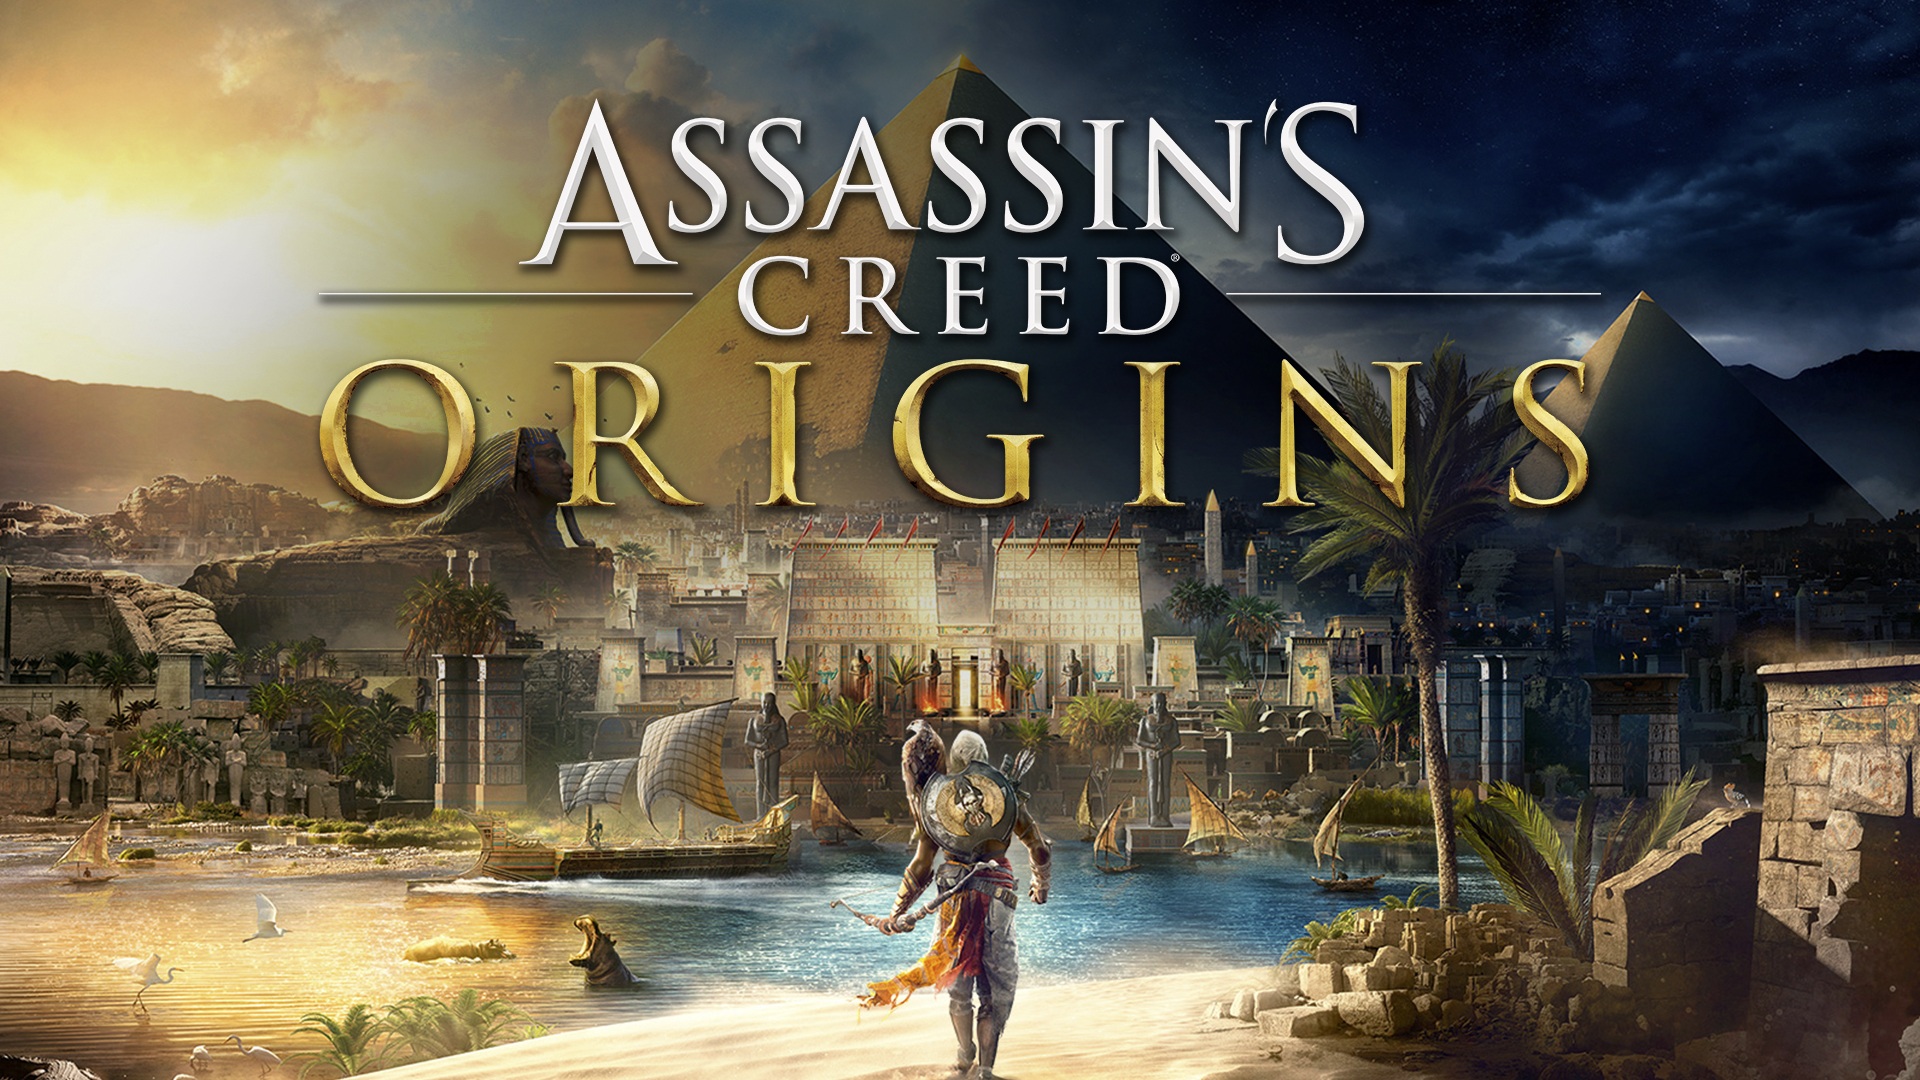 Assassin’s Creed: Origins, Uplay'de bedava oldu oldu (19-21 haziran) kadar